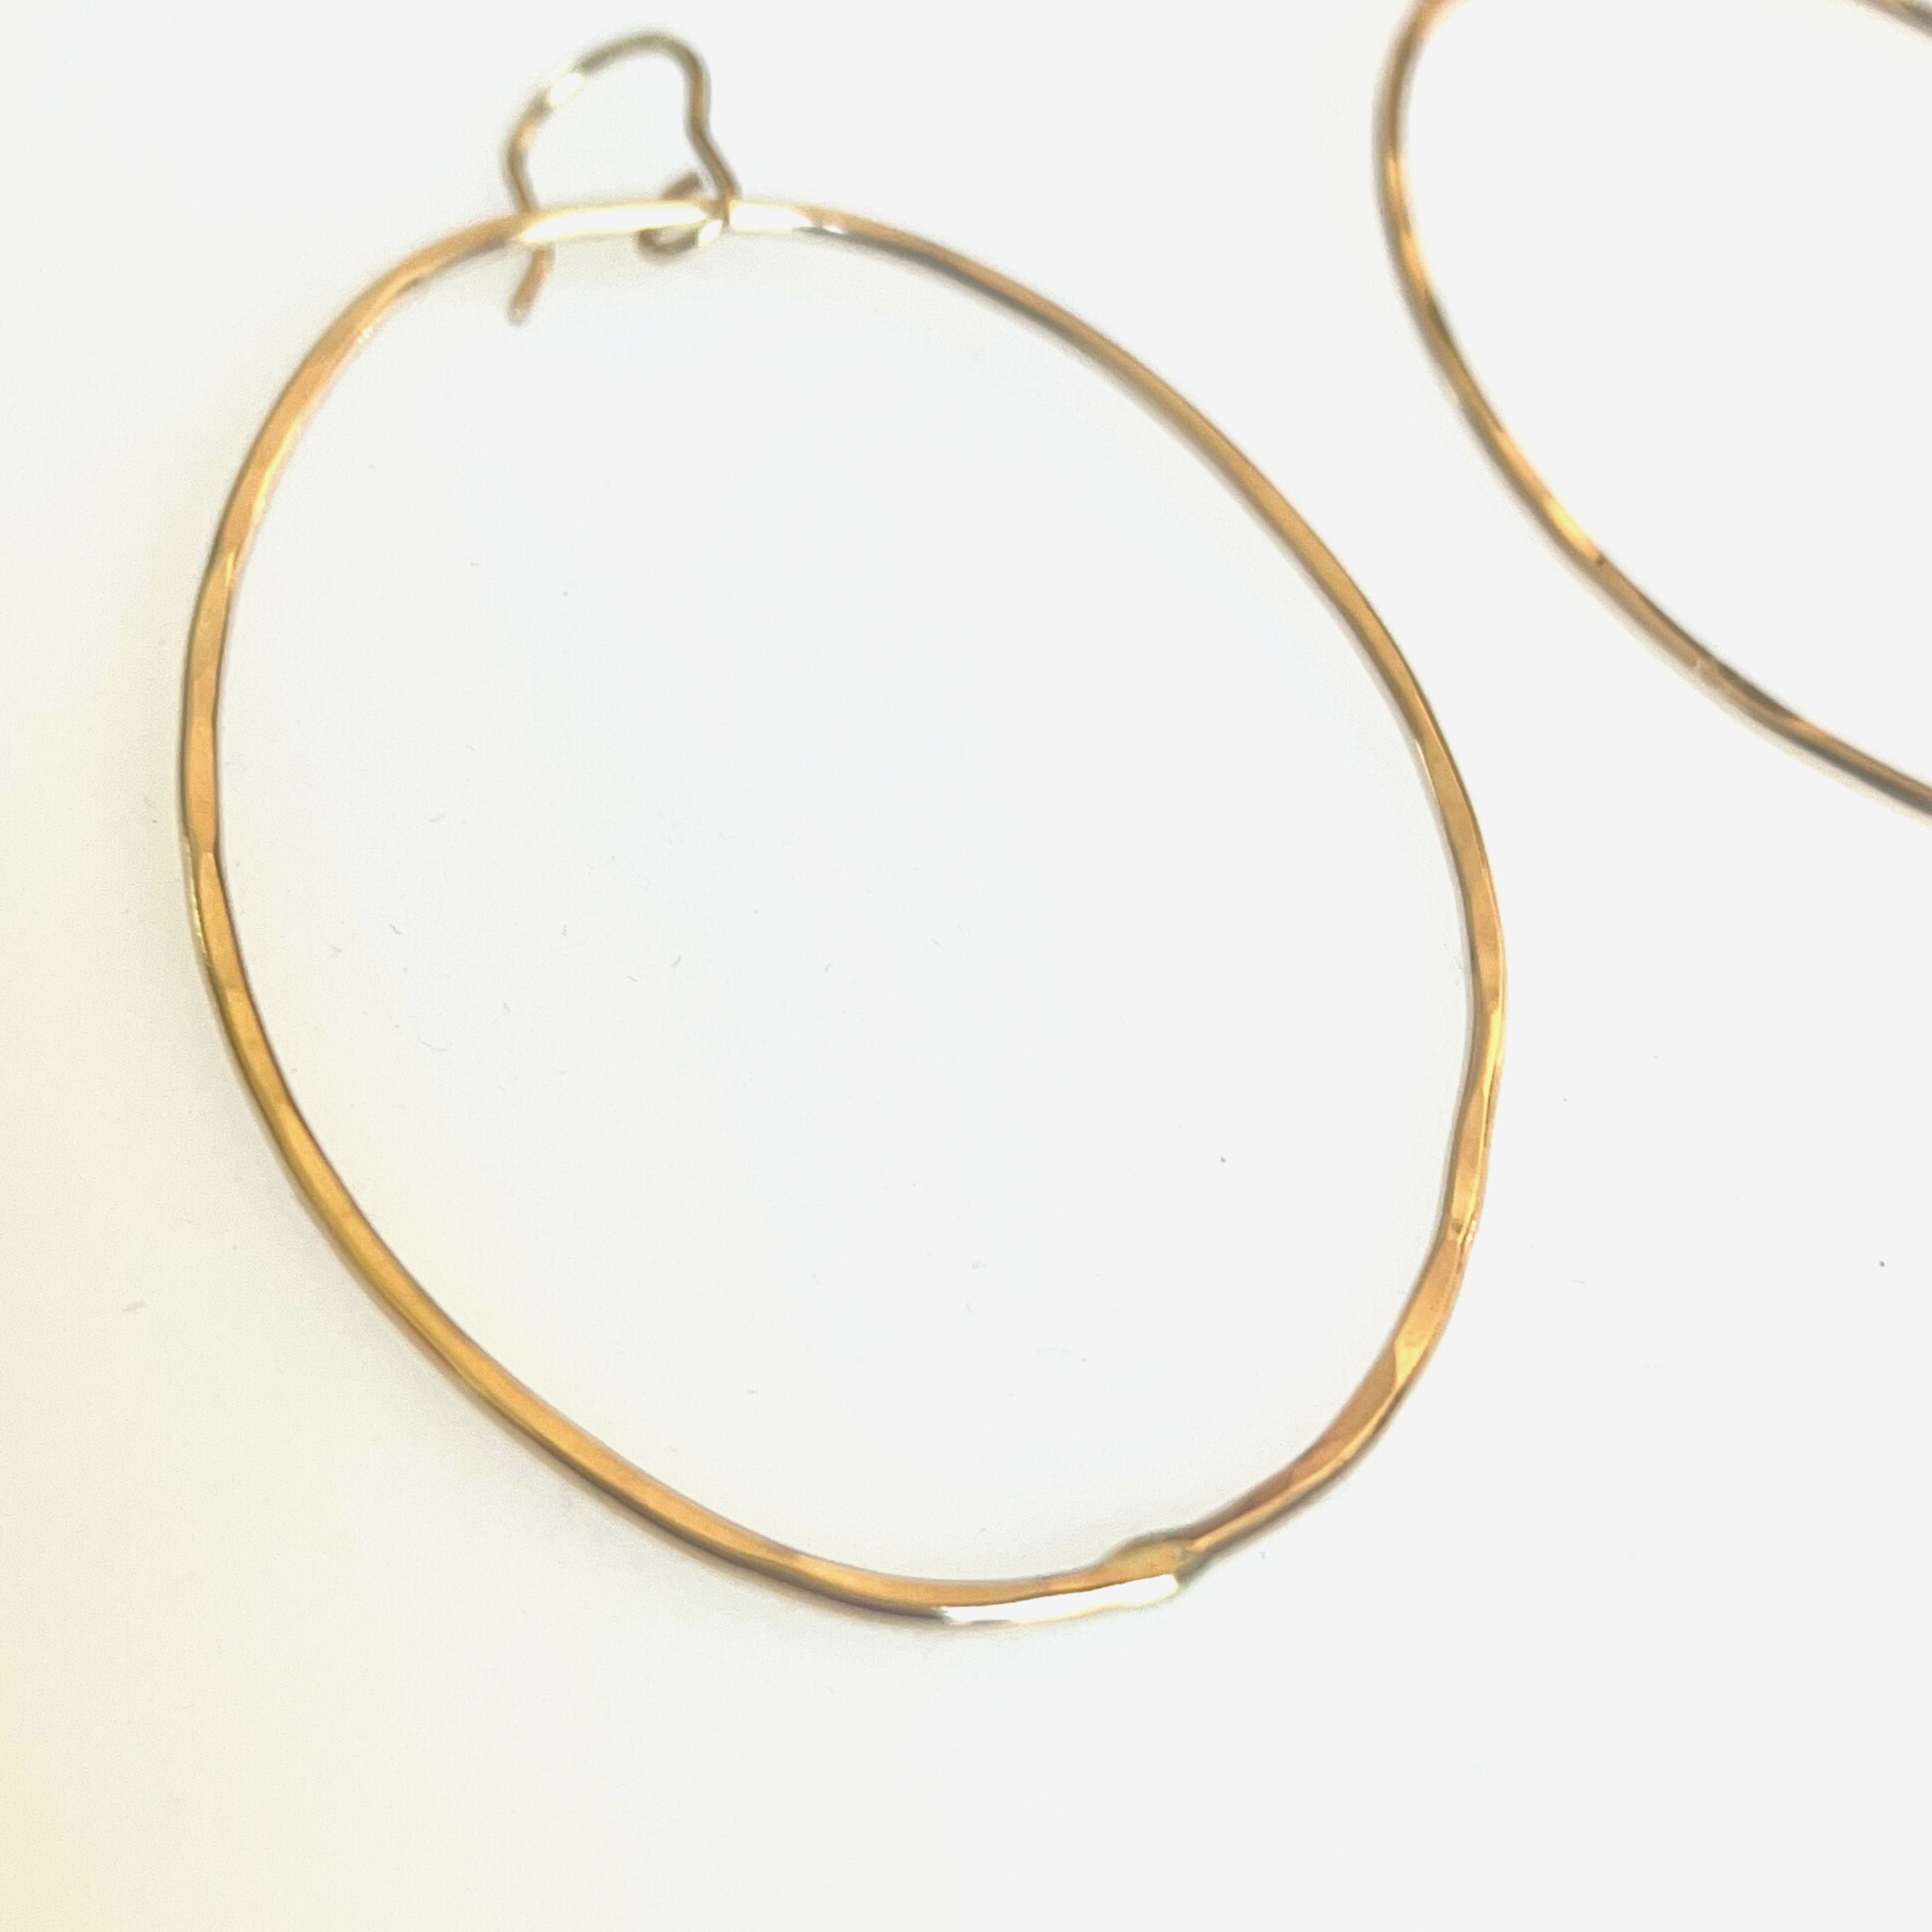  14kt Gold Filled Large Organic Oval Shape Hoop Earrings